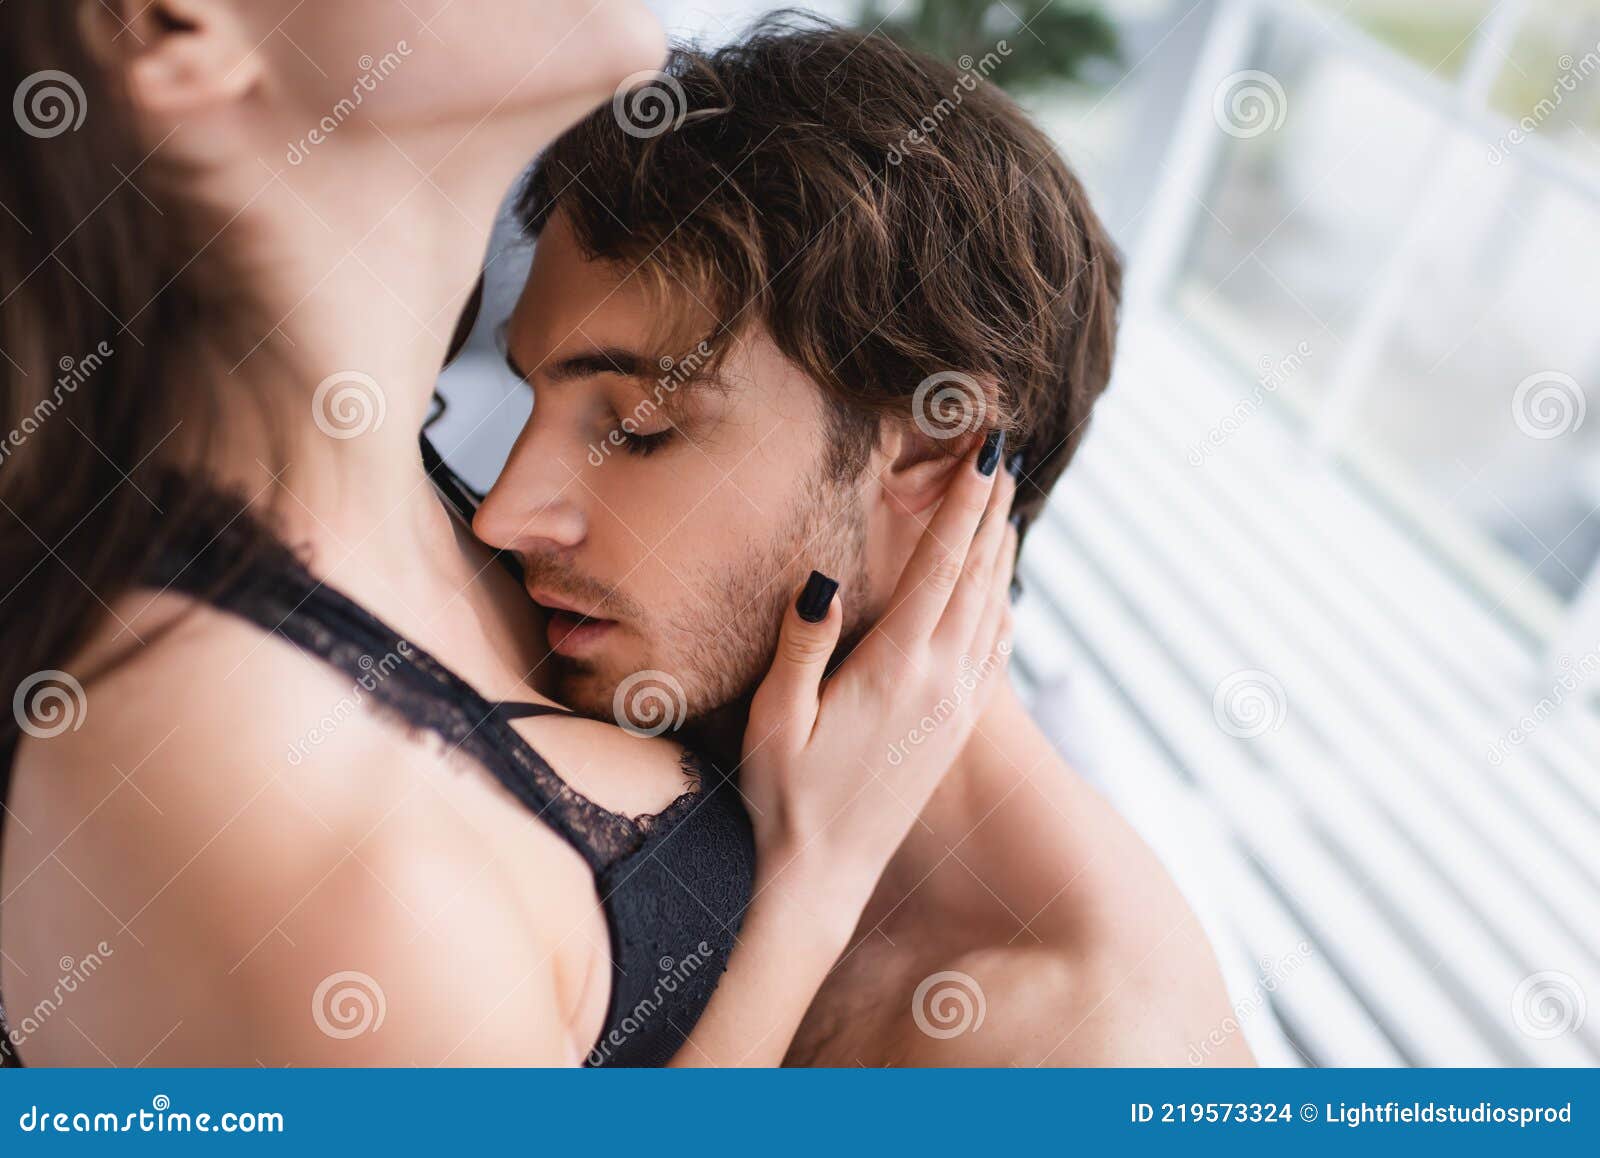 chiara martin recommends man kissing woman breast pic